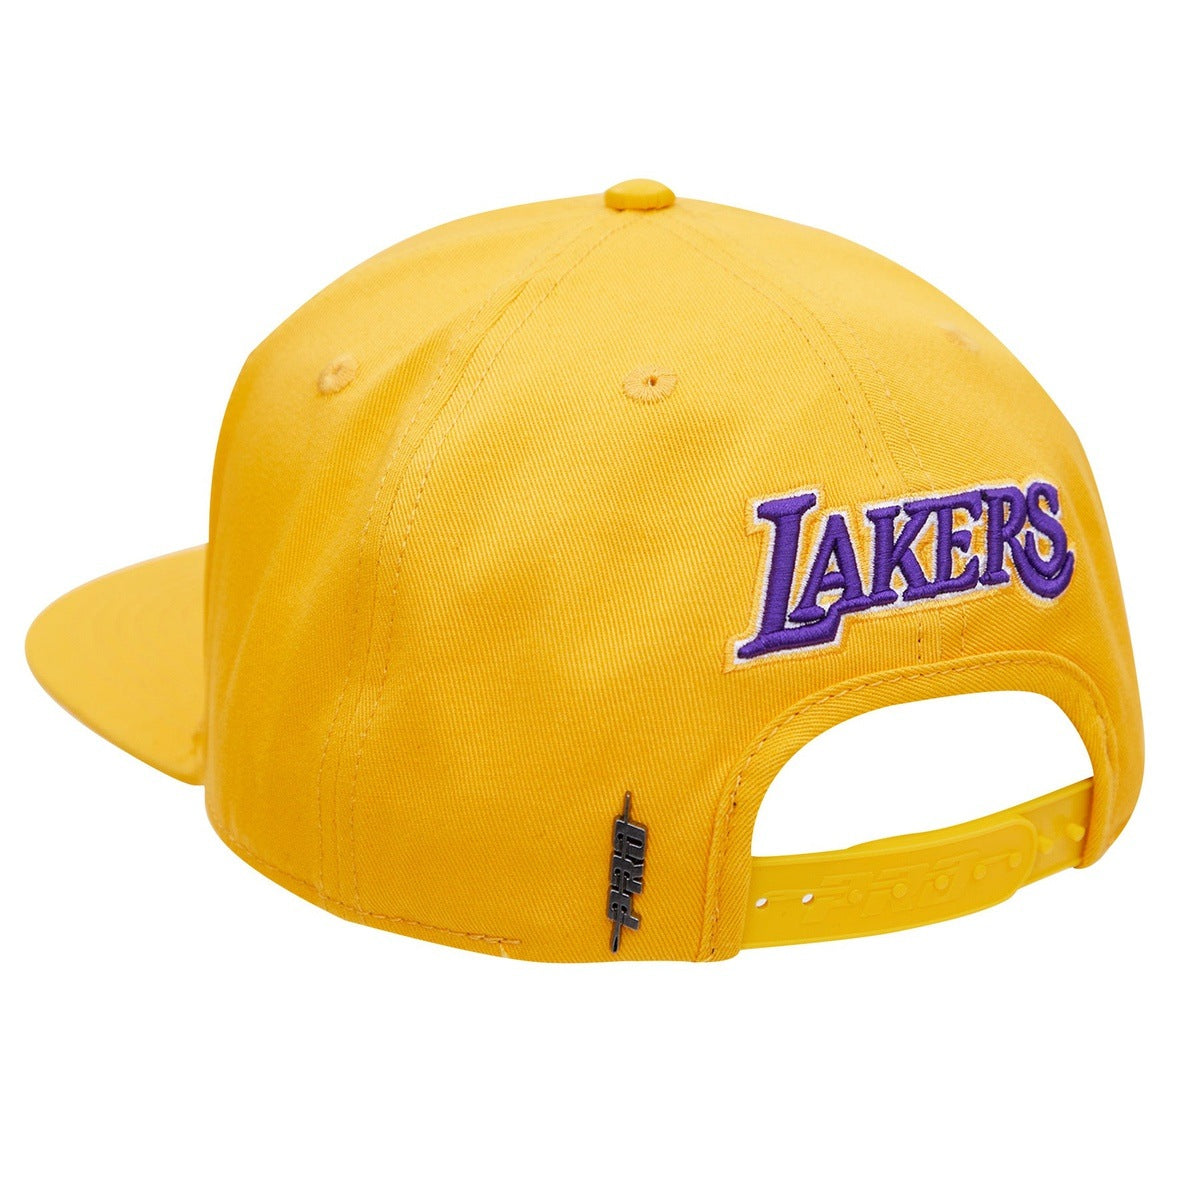 Pro Standard NBA Los Angeles Lakers Logo Adjustable Cap gray yellow